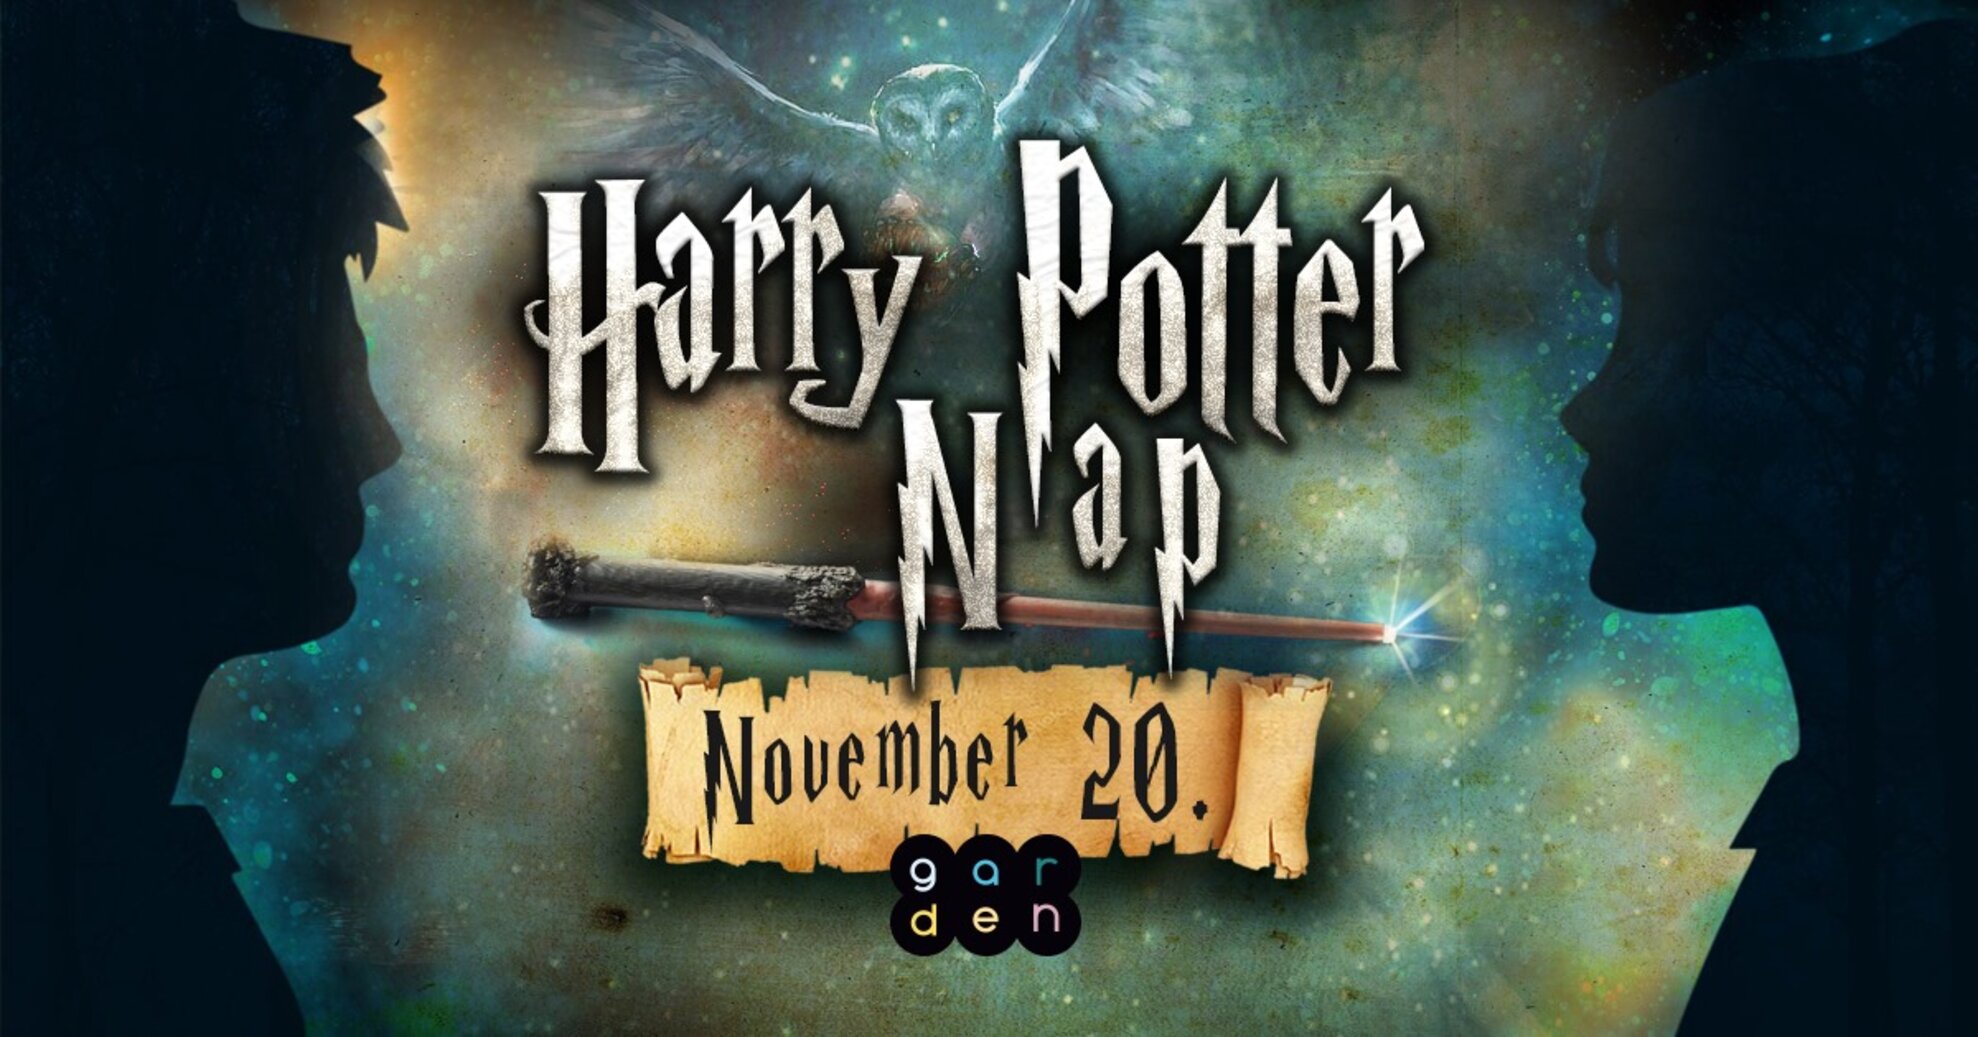 Harry Potter-nap